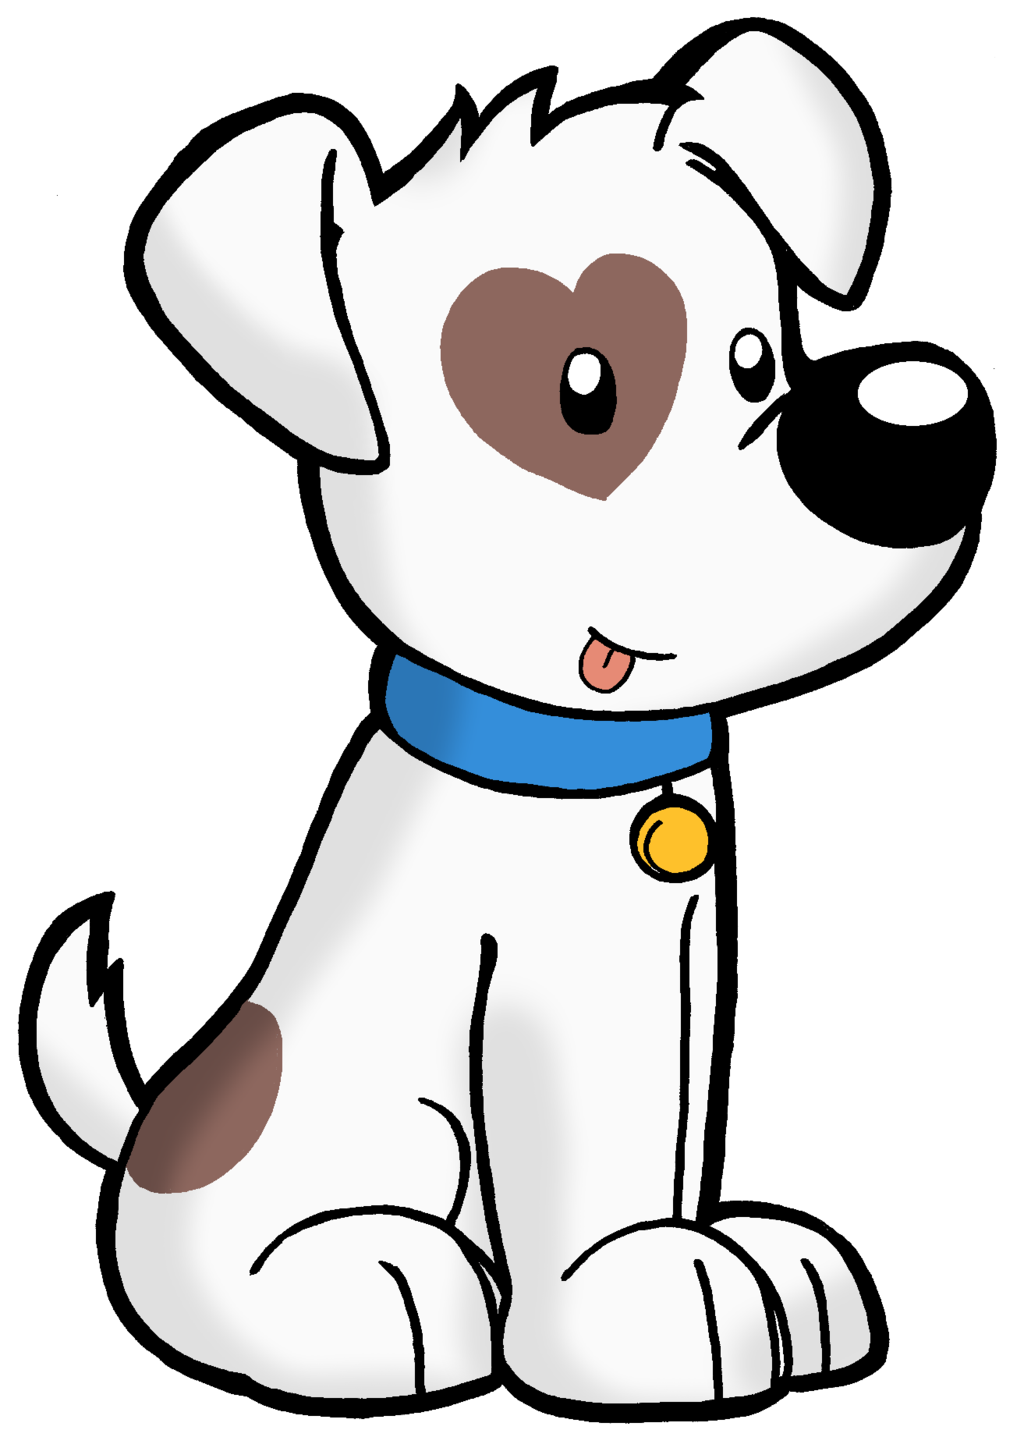 Dog Cartoon png download - 858*932 - Free Transparent Text png